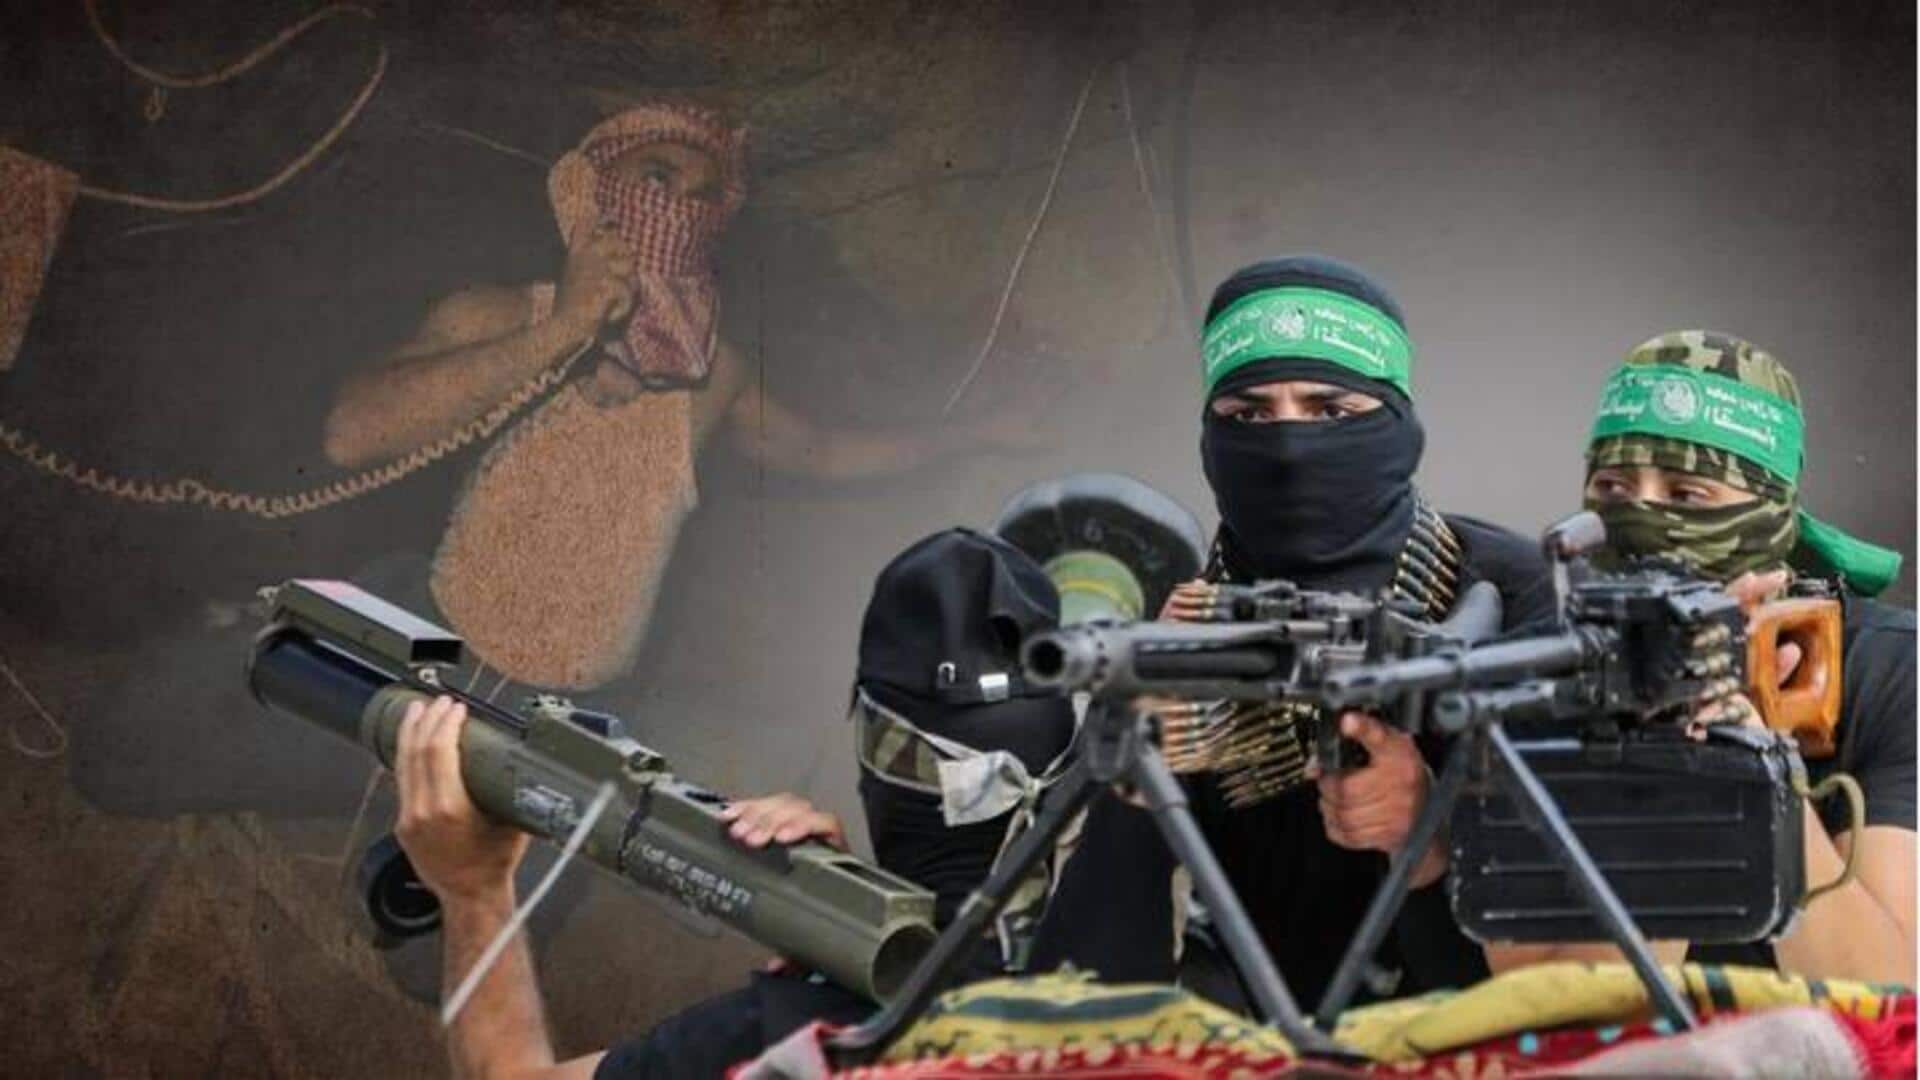 Hamas tunnel: హమాస్‌కు భారీ ఎదురుదెబ్బ.. గాజాలో అతిపెద్ద సొరంగాన్ని గుర్తించిన ఇజ్రాయెల్ 